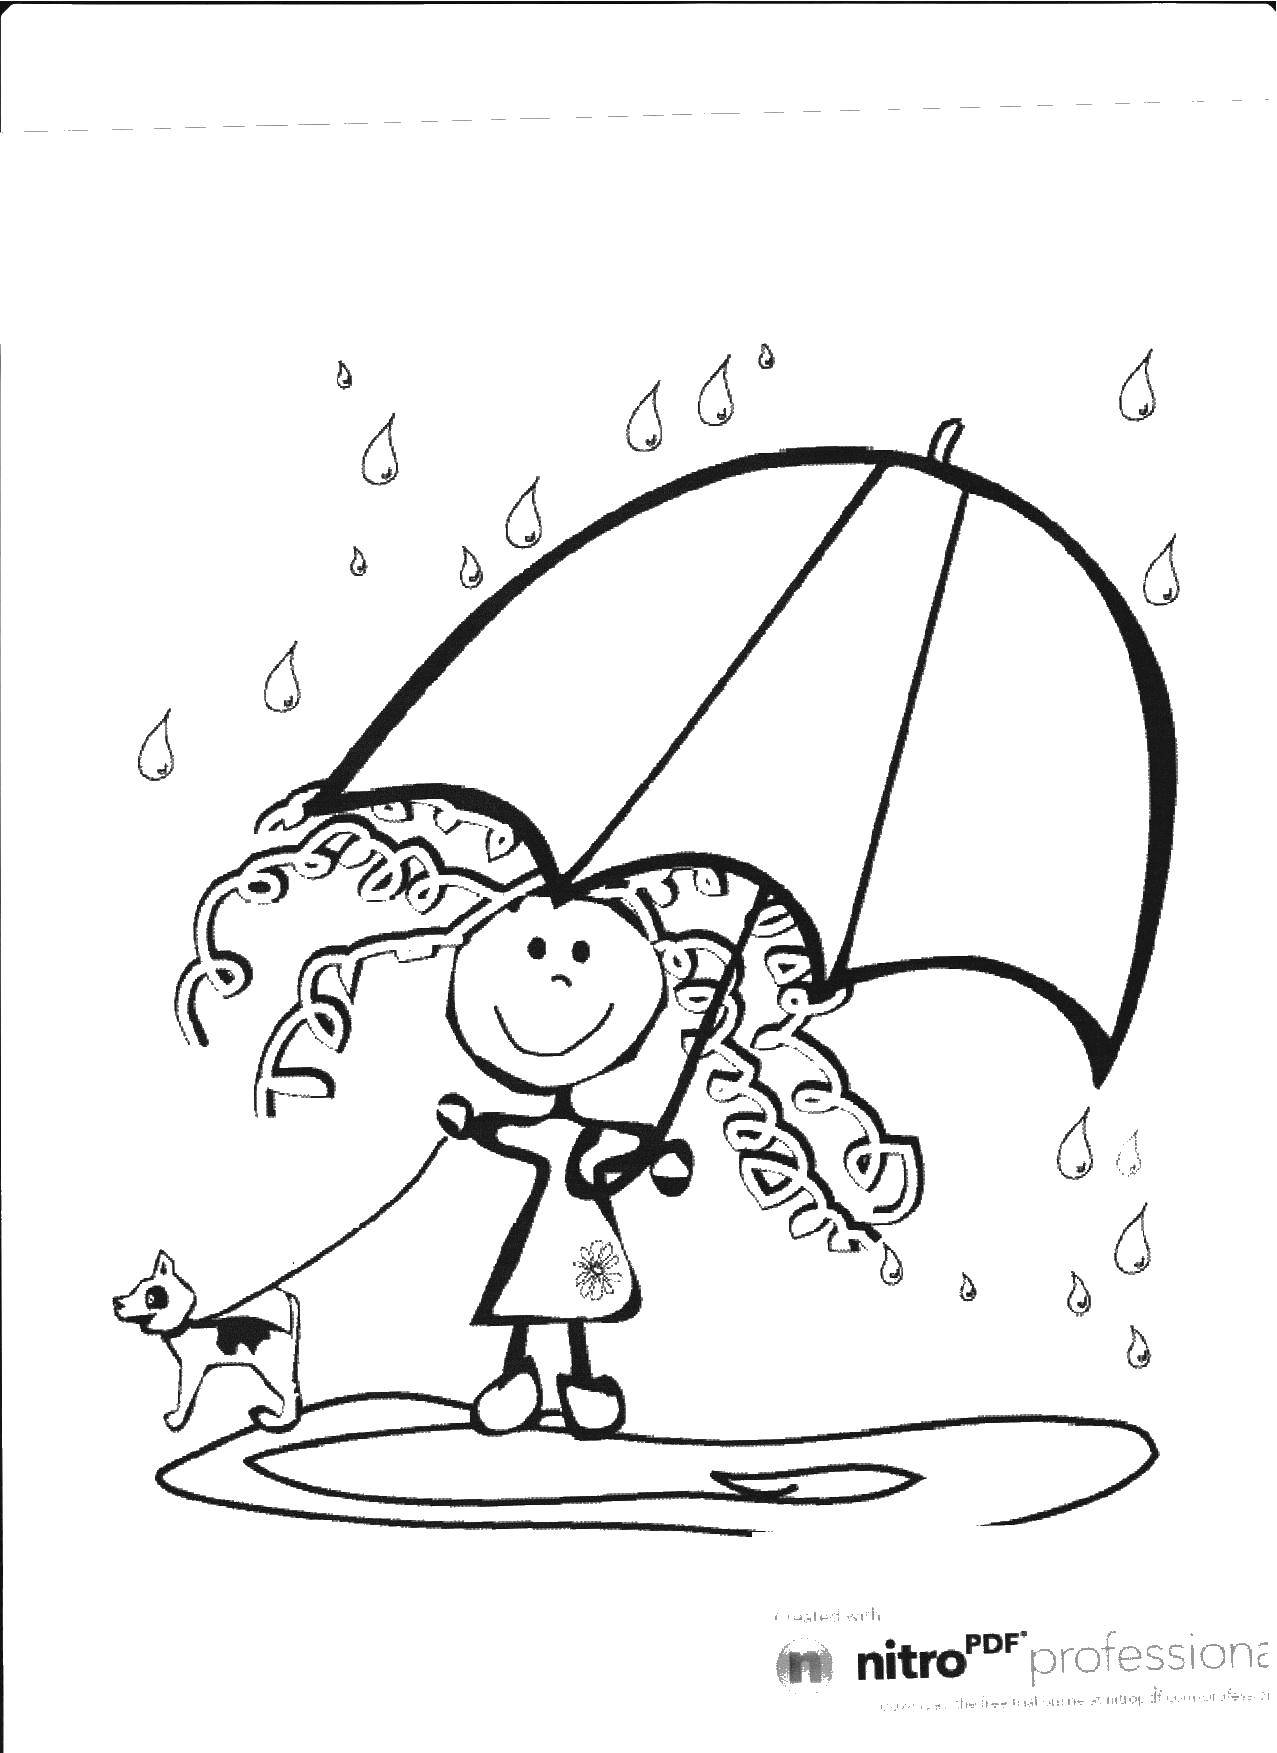 Coloring Girl with dog under umbrella. Category Rain. Tags:  rain, umbrella, girl.